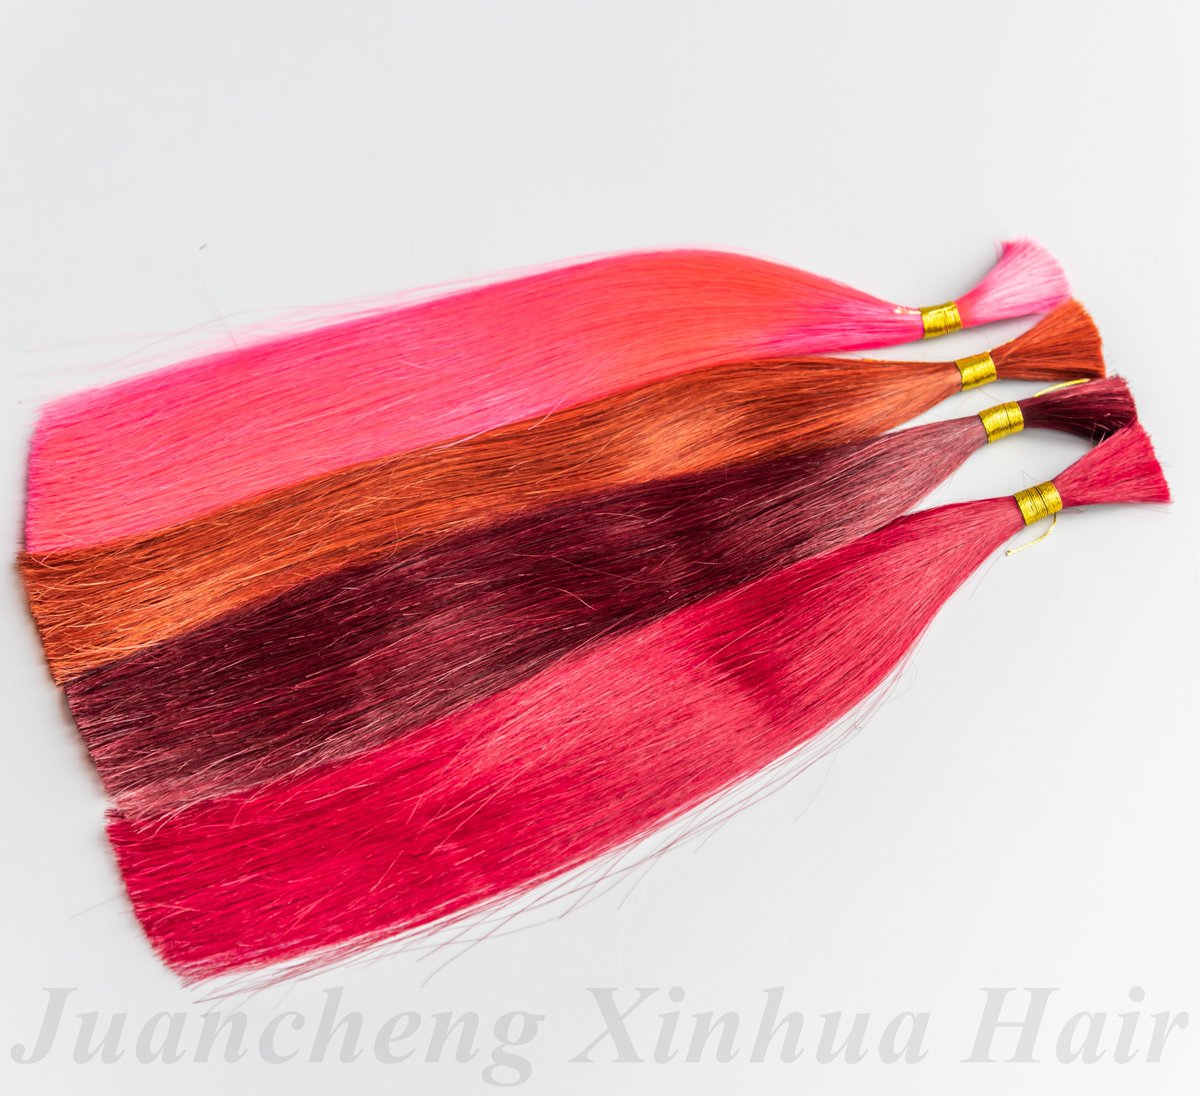 Juancheng Xinhua Hair Products Co., Ltd
Qingdao Crown of Hair Products Co., Ltd

Email: julia@chinahaircrown.com
api.whatsapp.com/send?phone=861…

#hairextensions #hairbulk #bulkhair #xinhuahair #hairfactory #hairproduction #hairwholesale